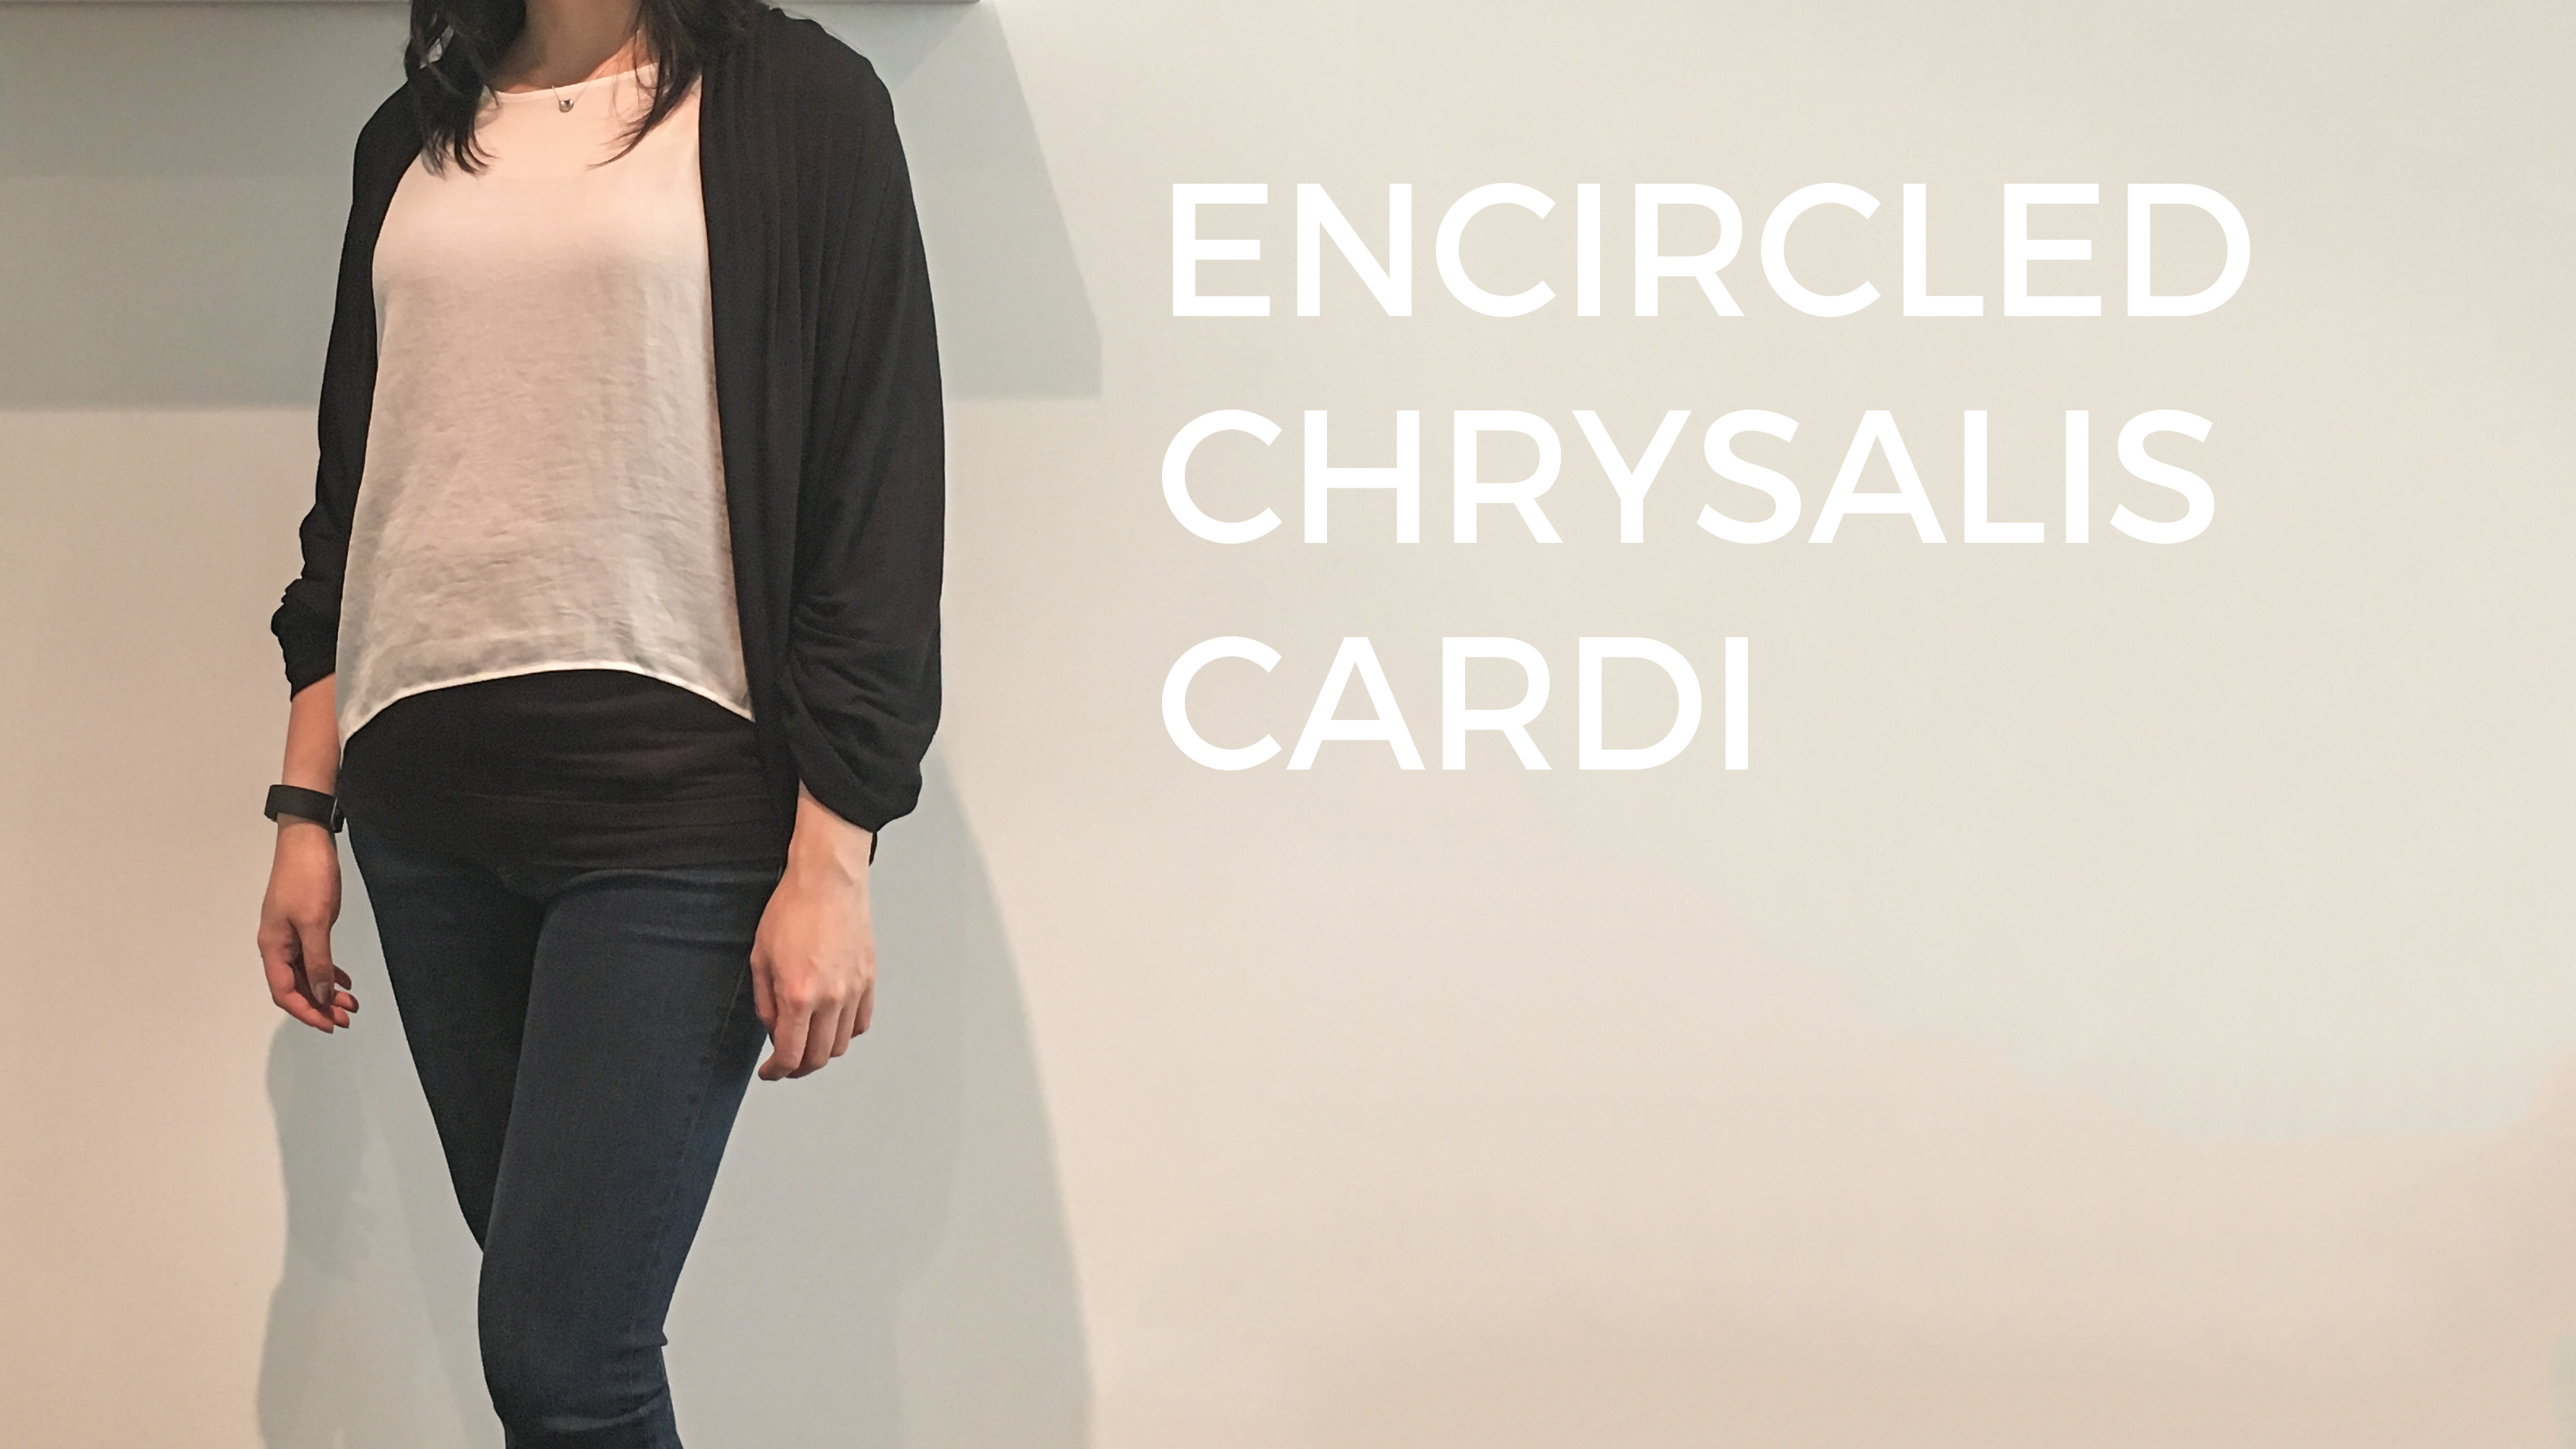 The Chrysalis Cardi by Encircled